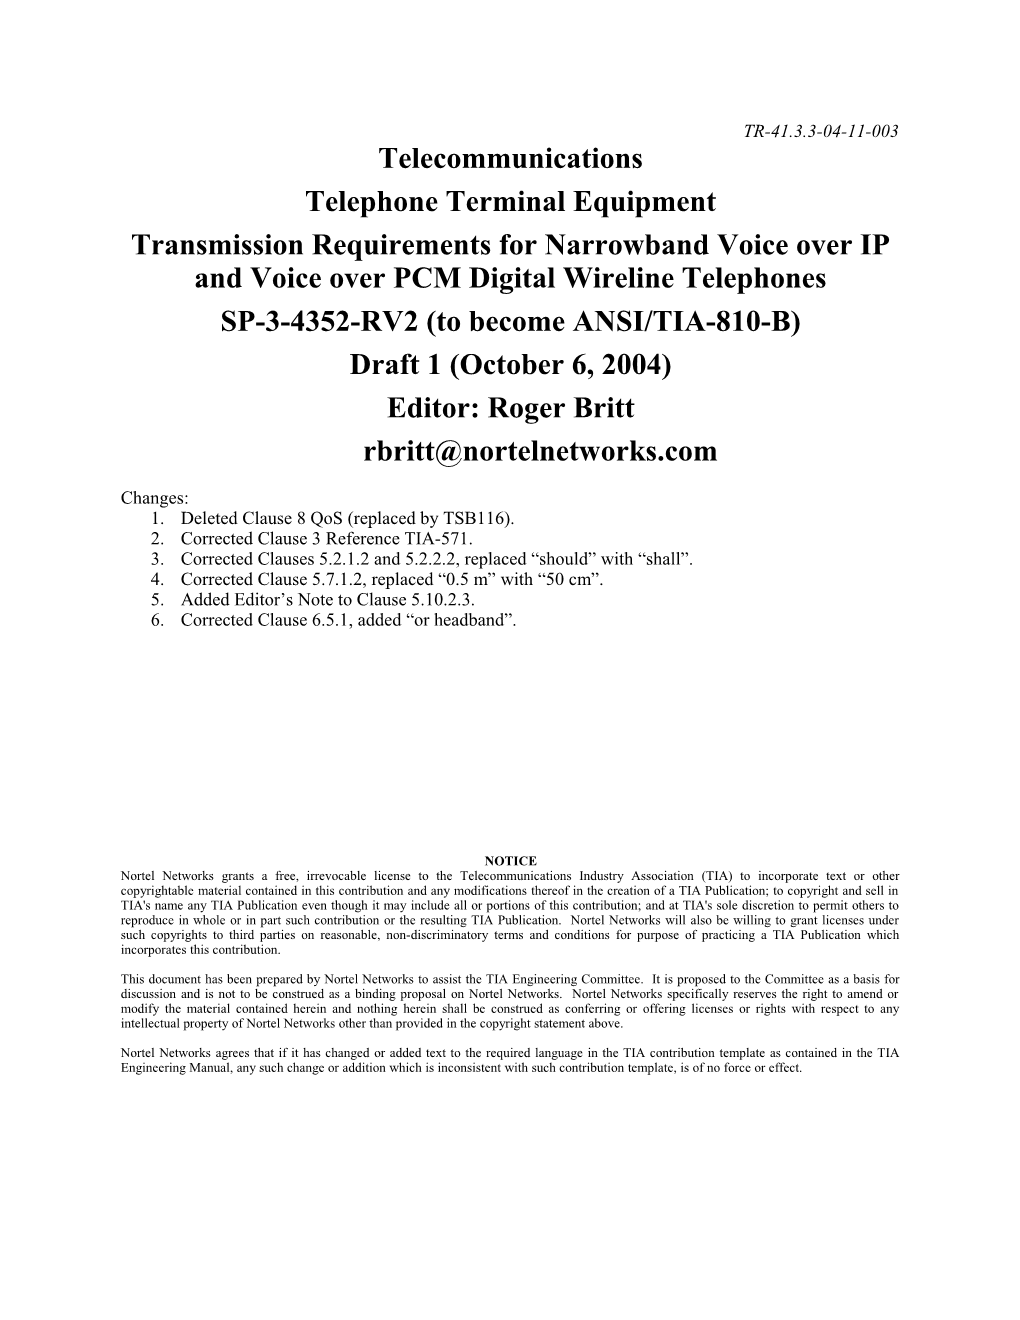 Telephone Terminal Equipment